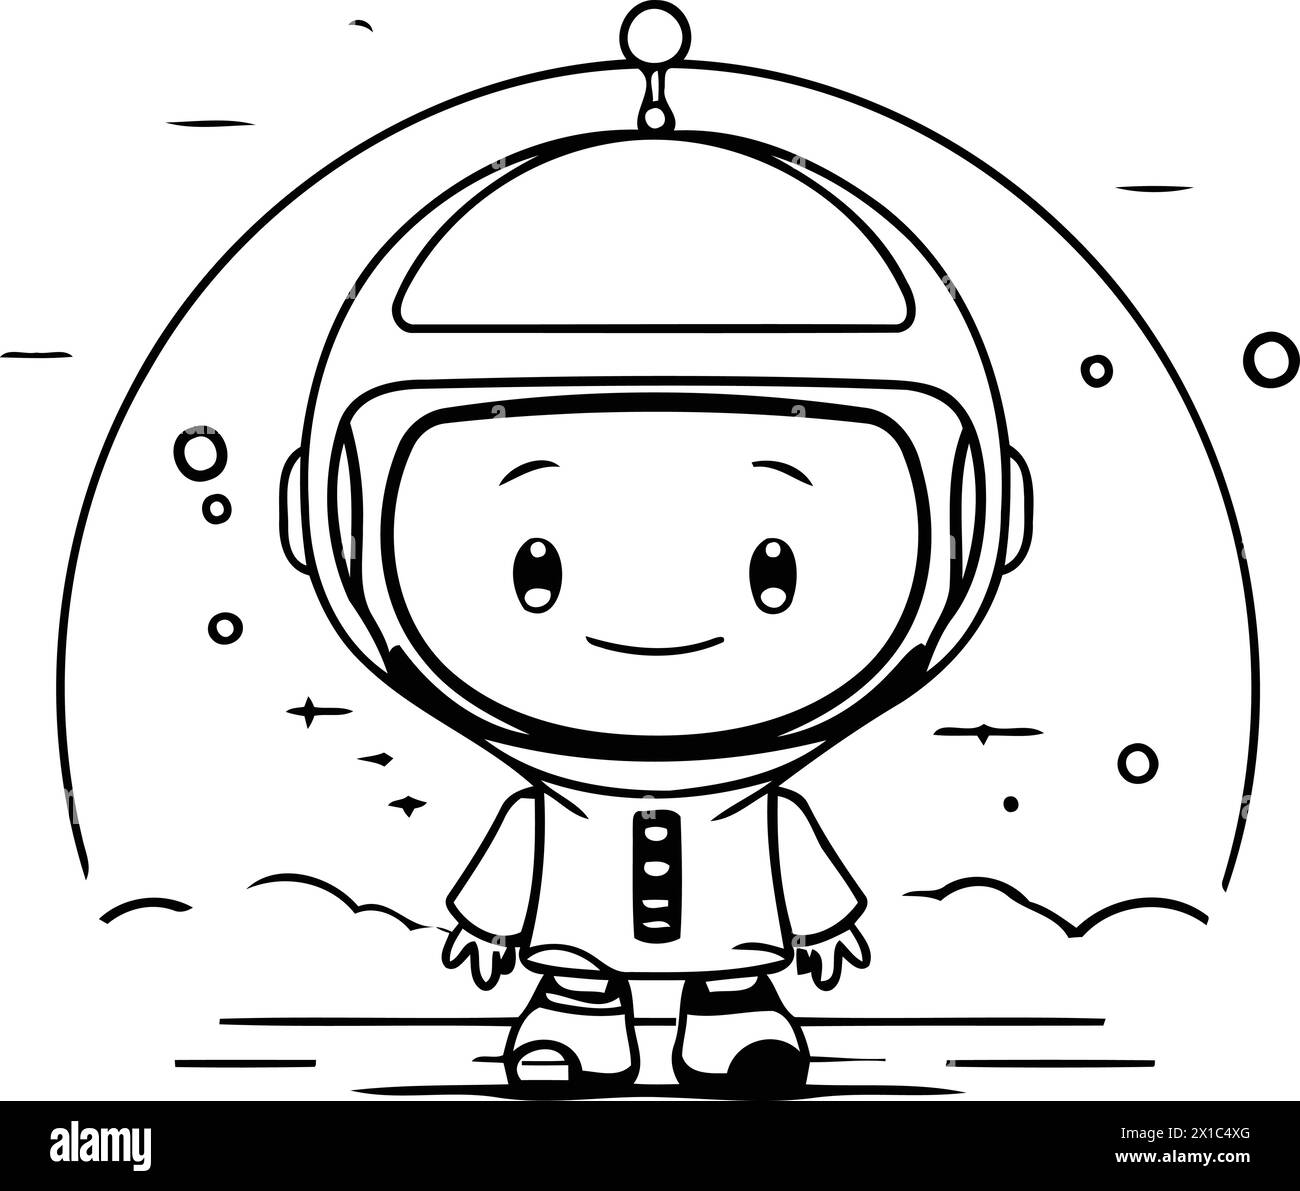 Cute cartoon astronaut character in space suit. Vector illustration. Flat design. Stock Vector